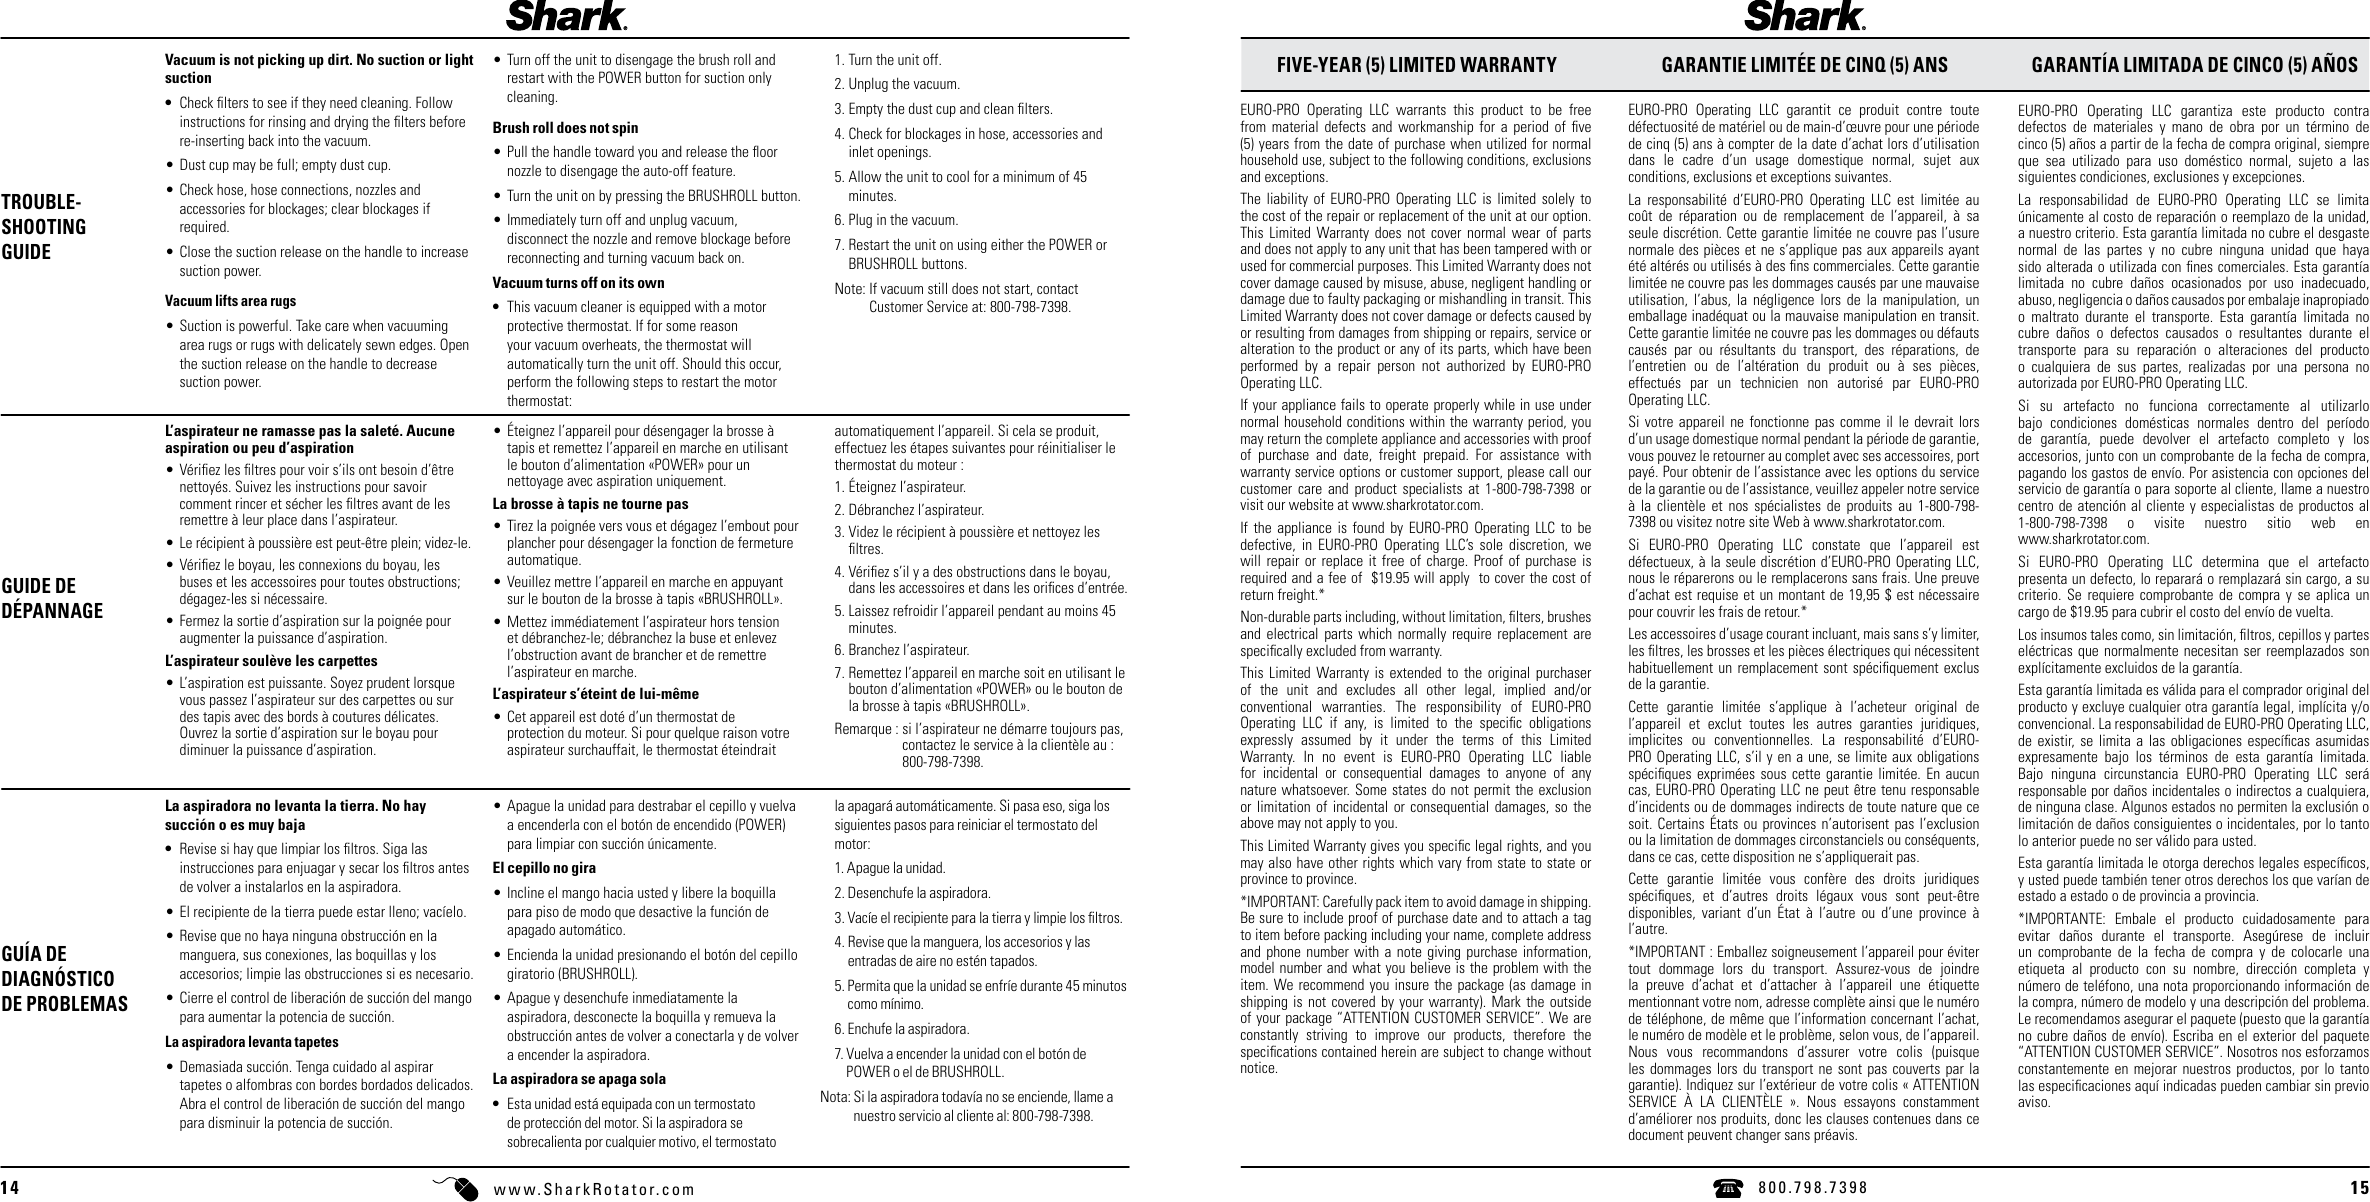 Page 8 of 9 - Shark Shark-Shark-Rotator-Professional-Lift-Away-Nv501-Users-Manual-  Shark-shark-rotator-professional-lift-away-nv501-users-manual